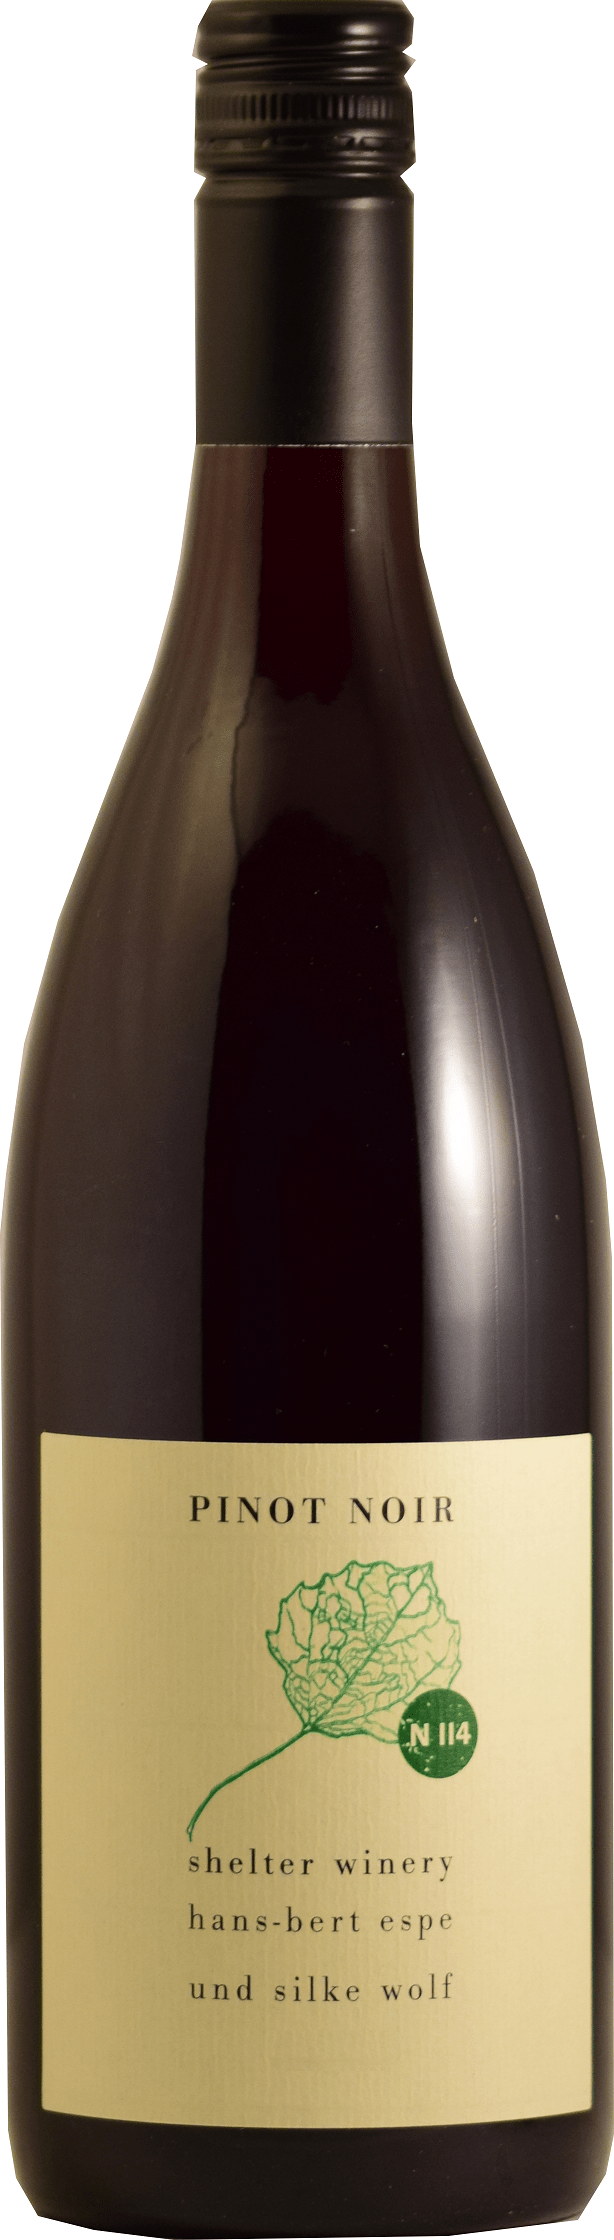 Pinot Noir, N114